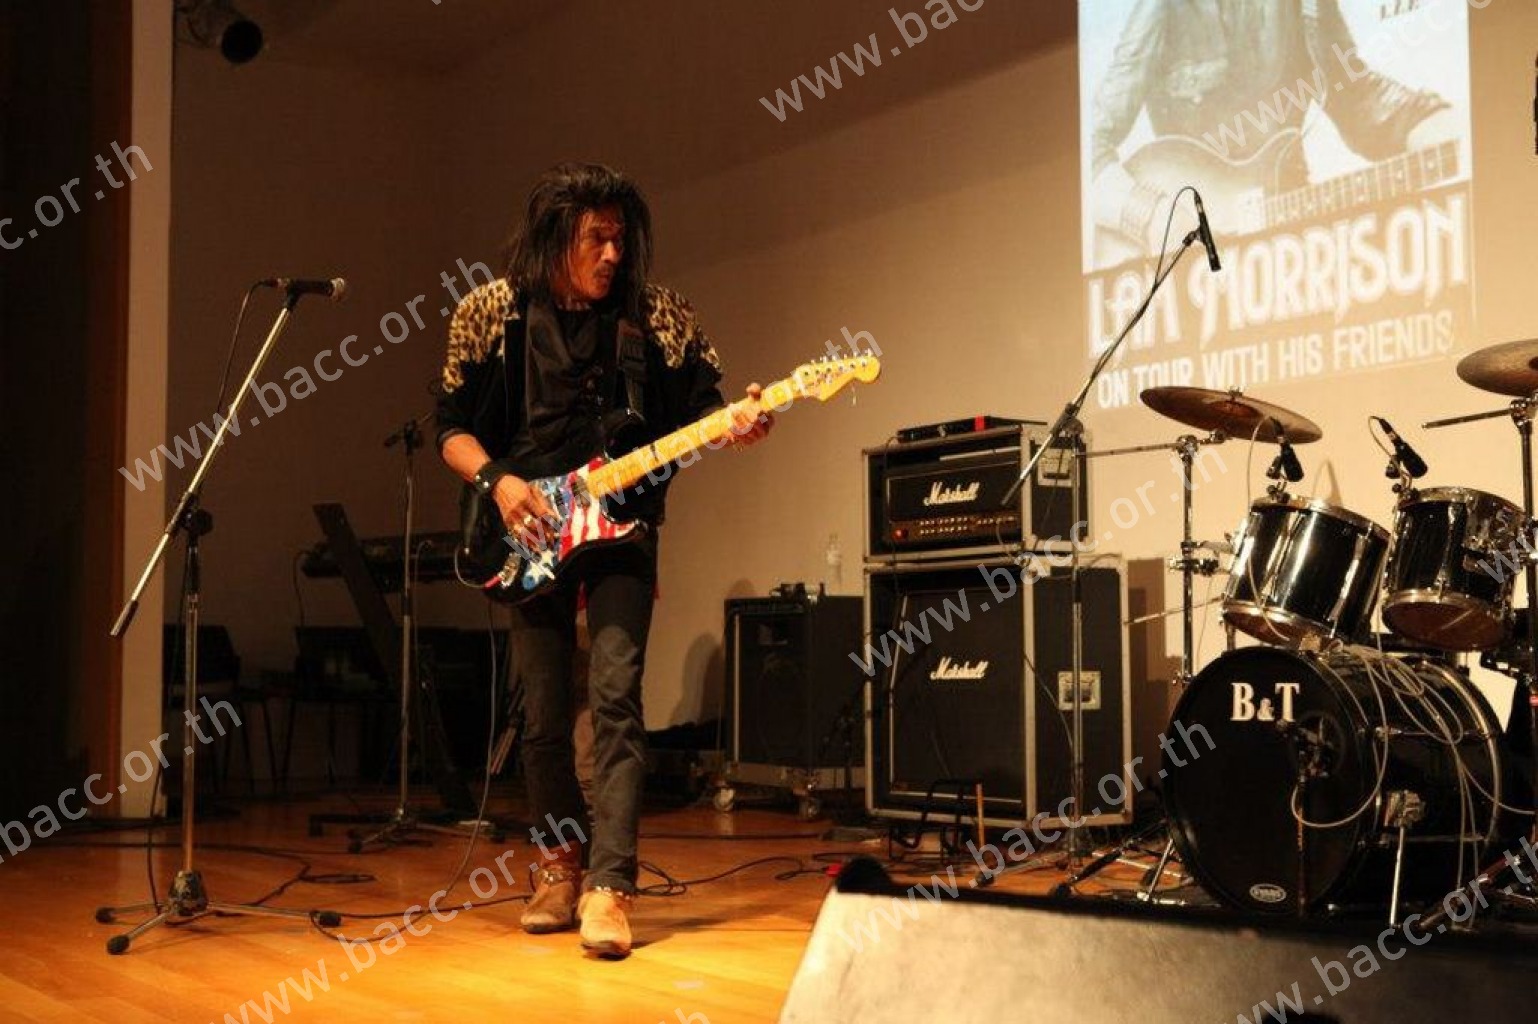 The 3rd Bangkok Music Forum : the Rock Legend “Lam Morrison”